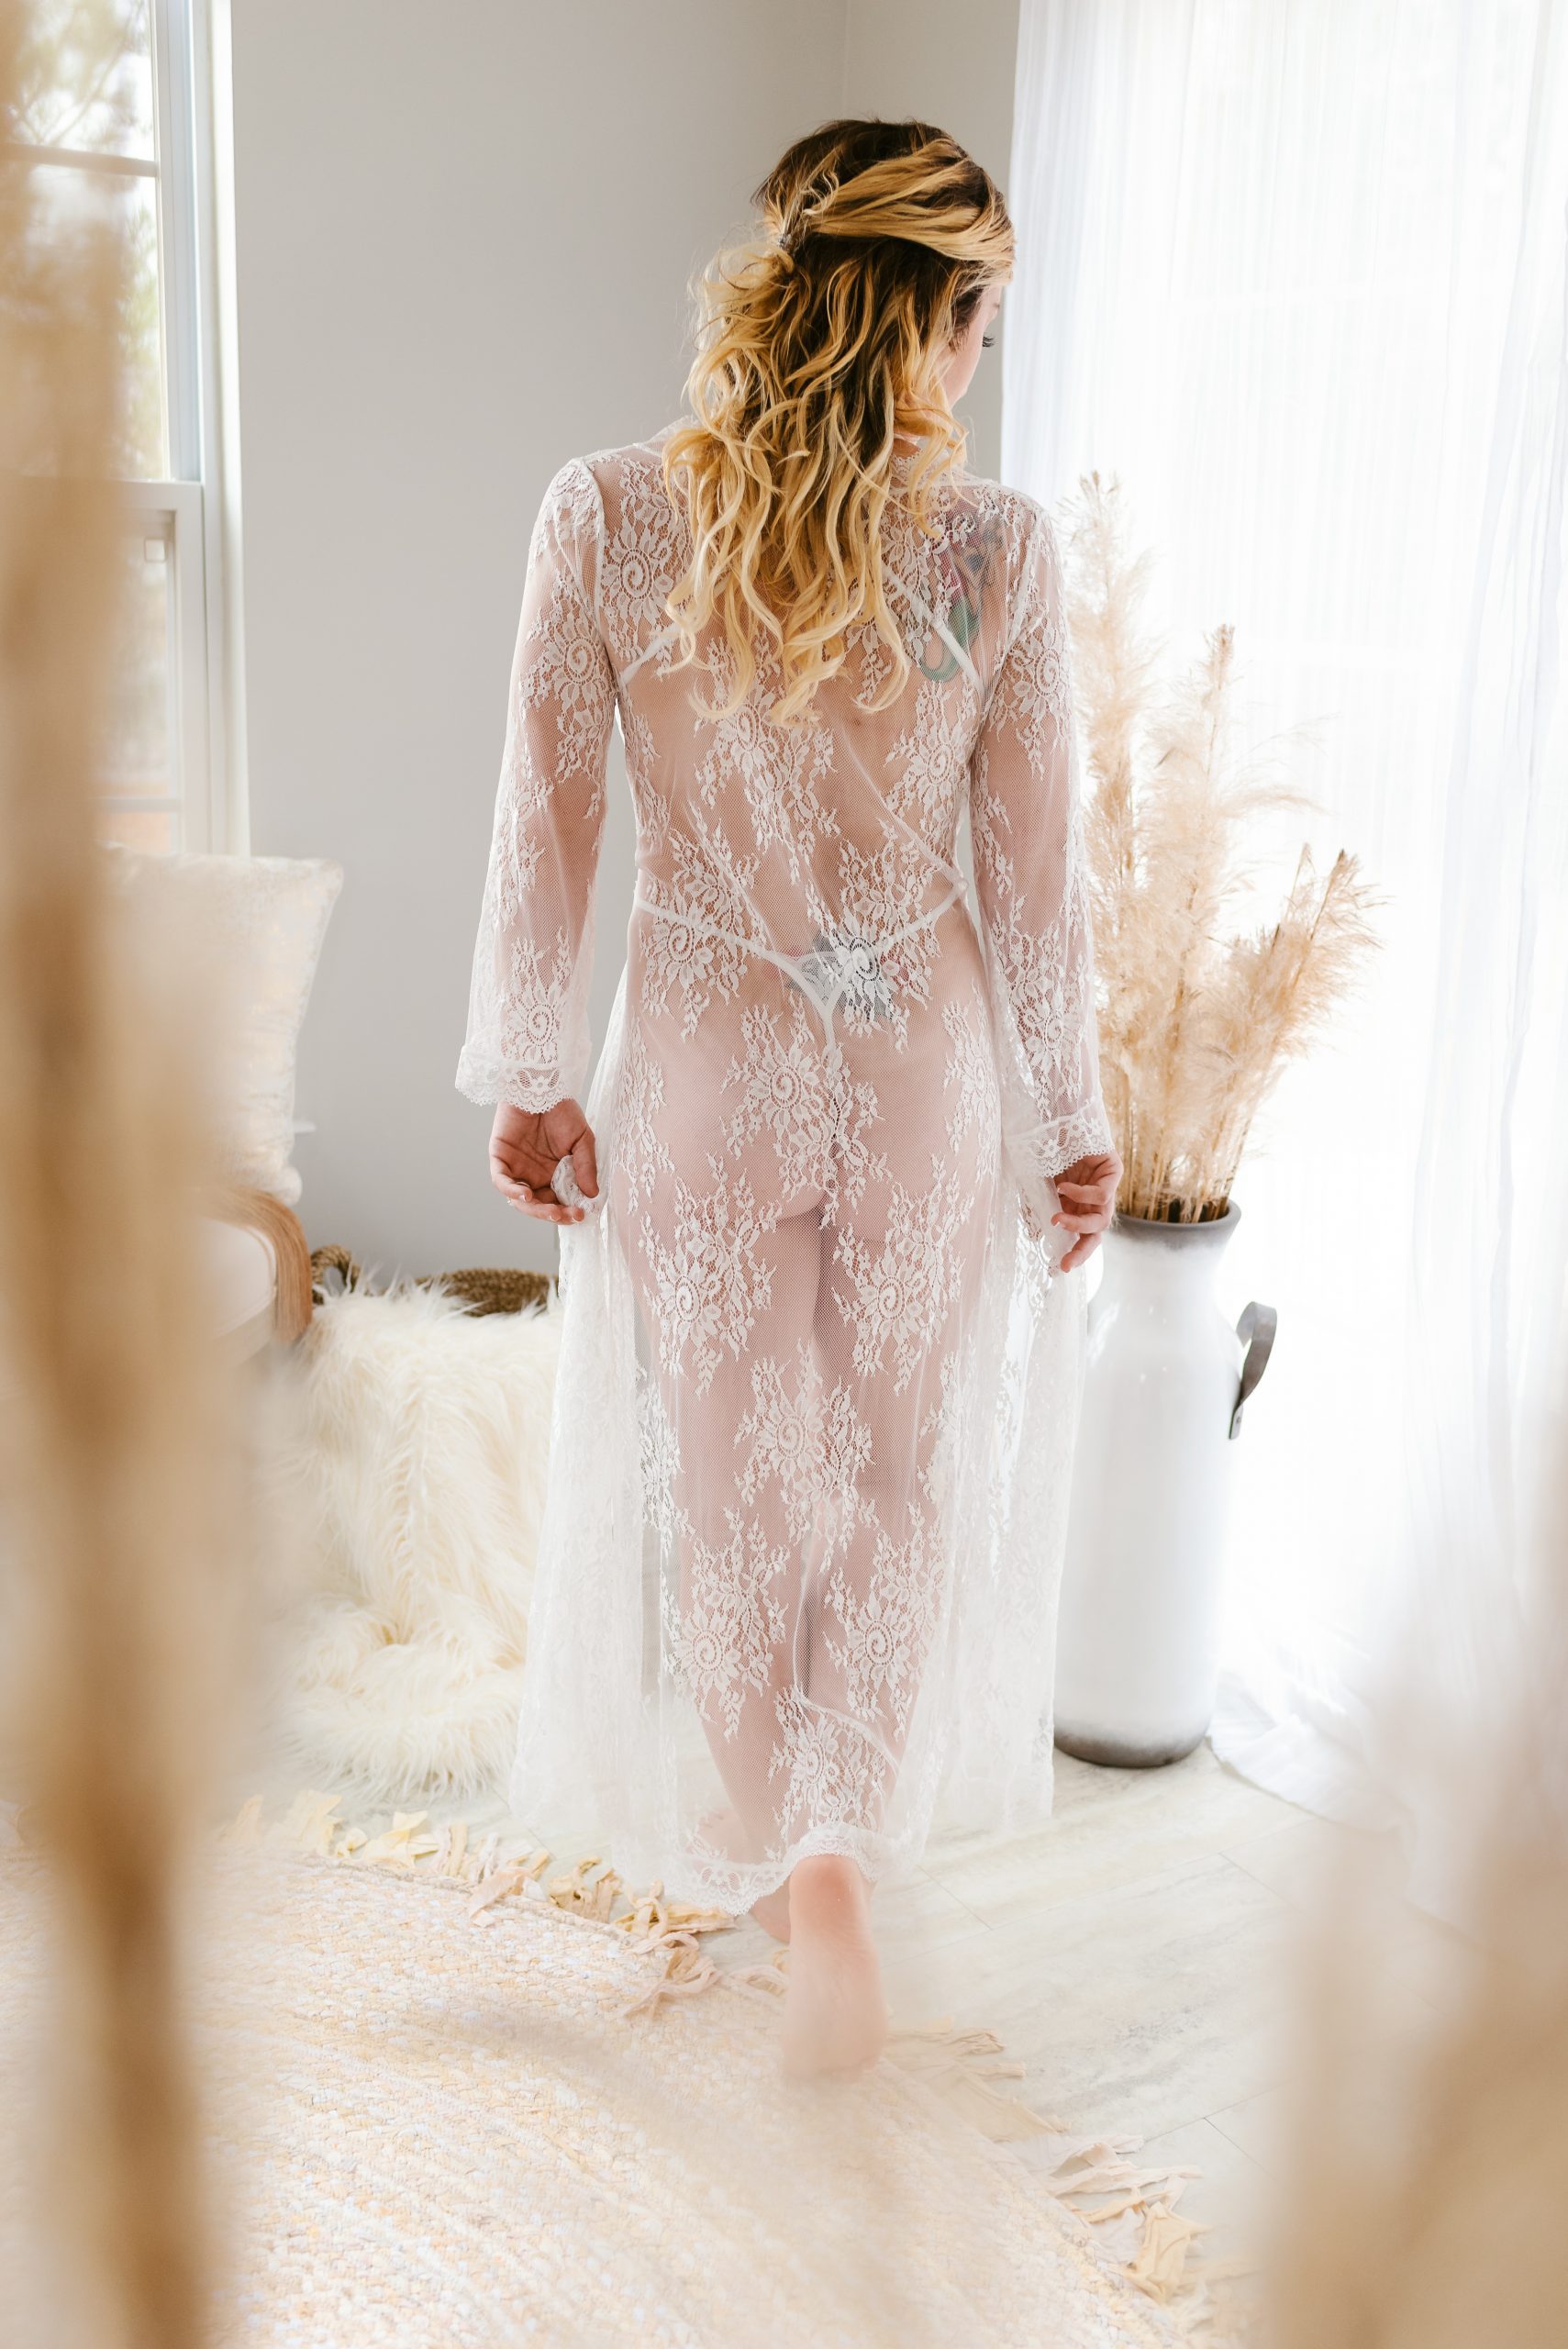 woman walking away in bridal lingerie